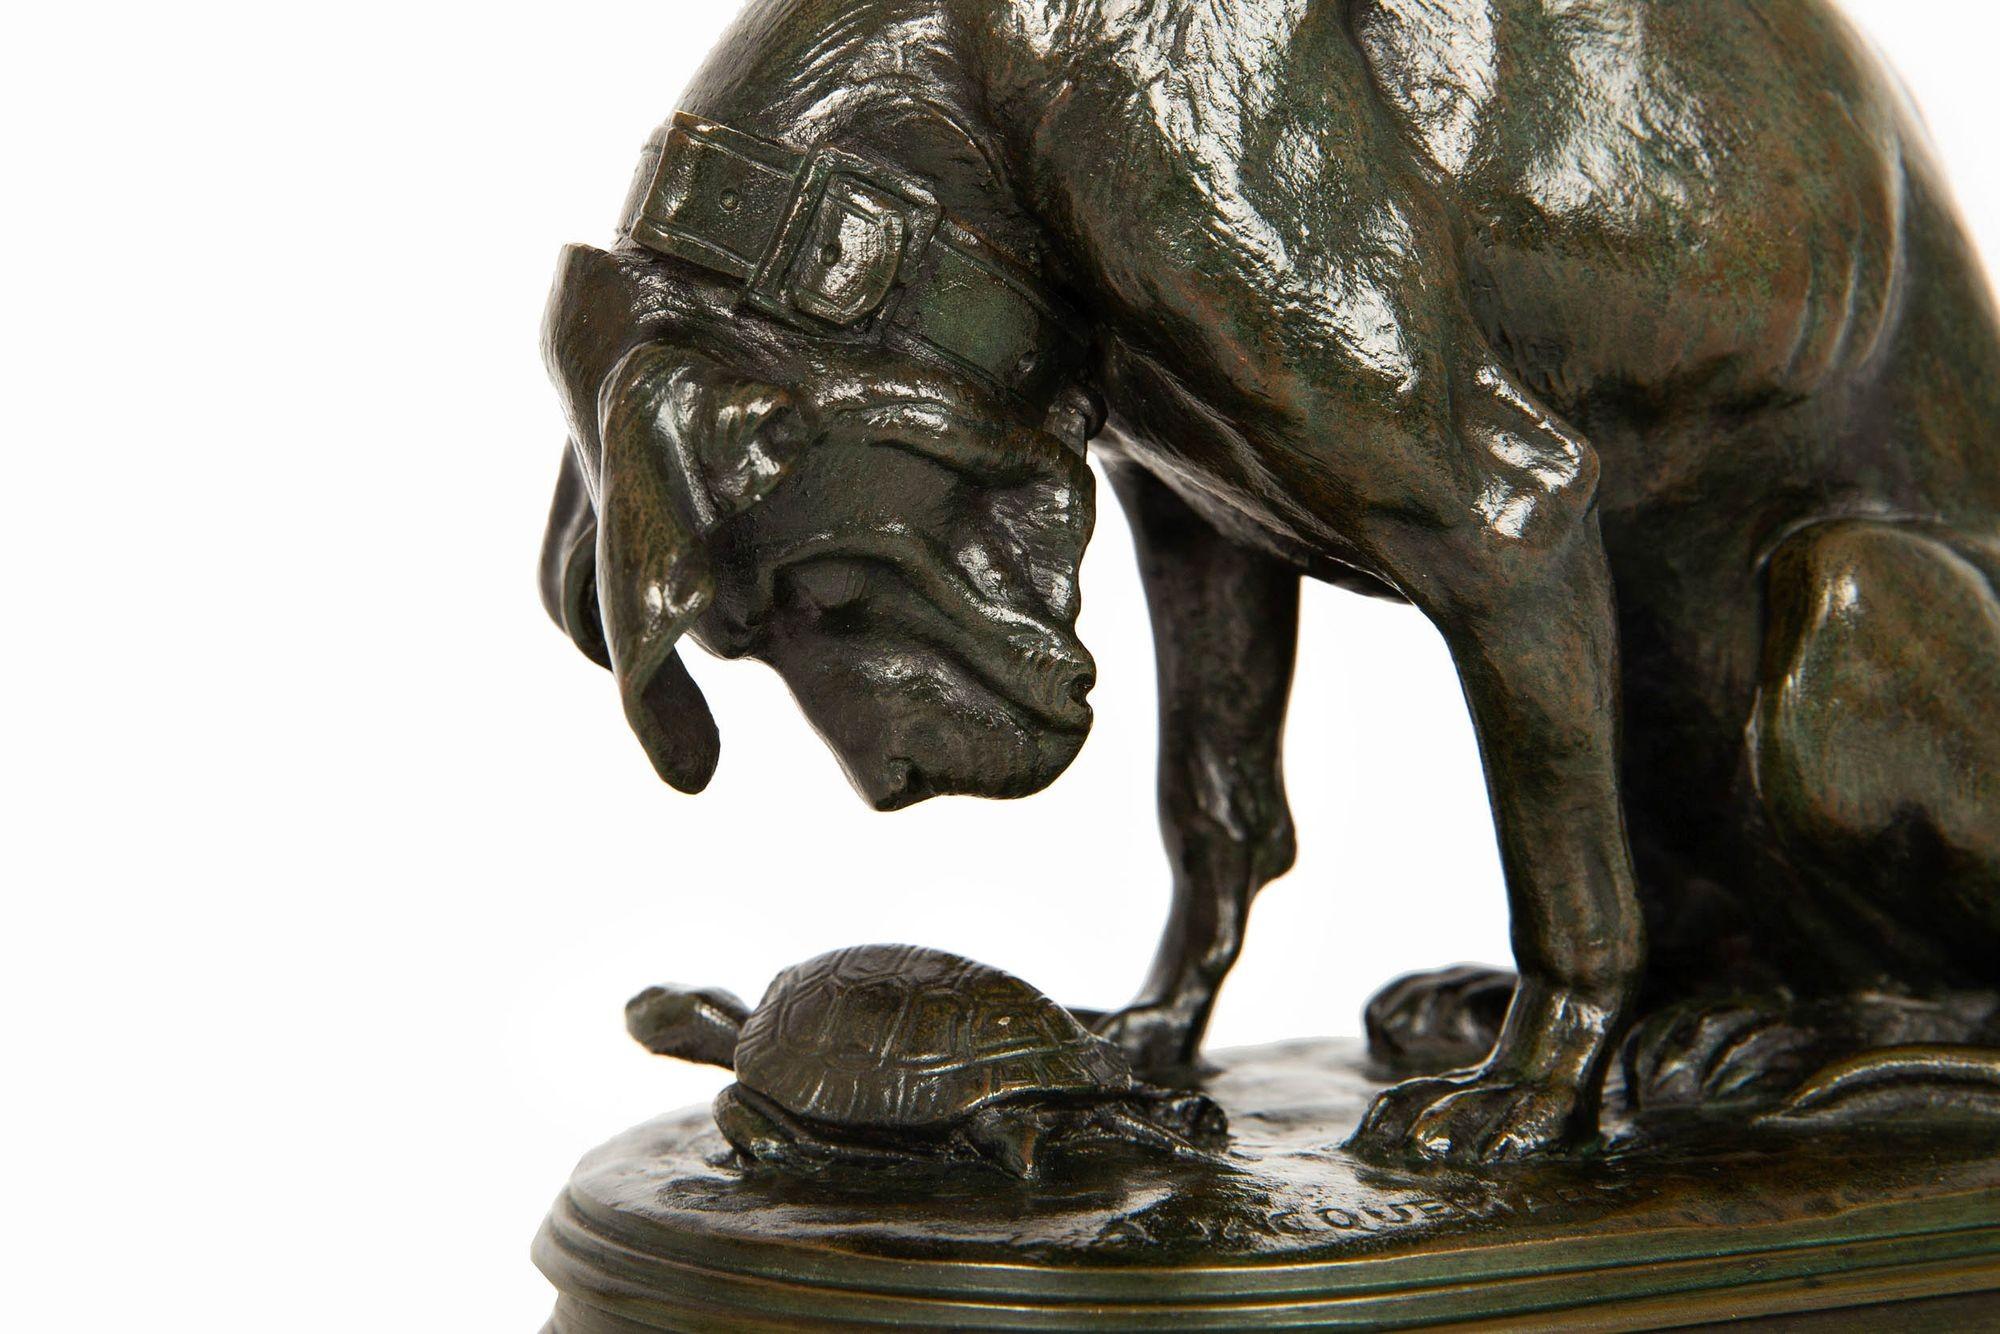 French Antique Bronze Sculpture “Hound & Tortoise” by Henri Jacquemart For Sale 2